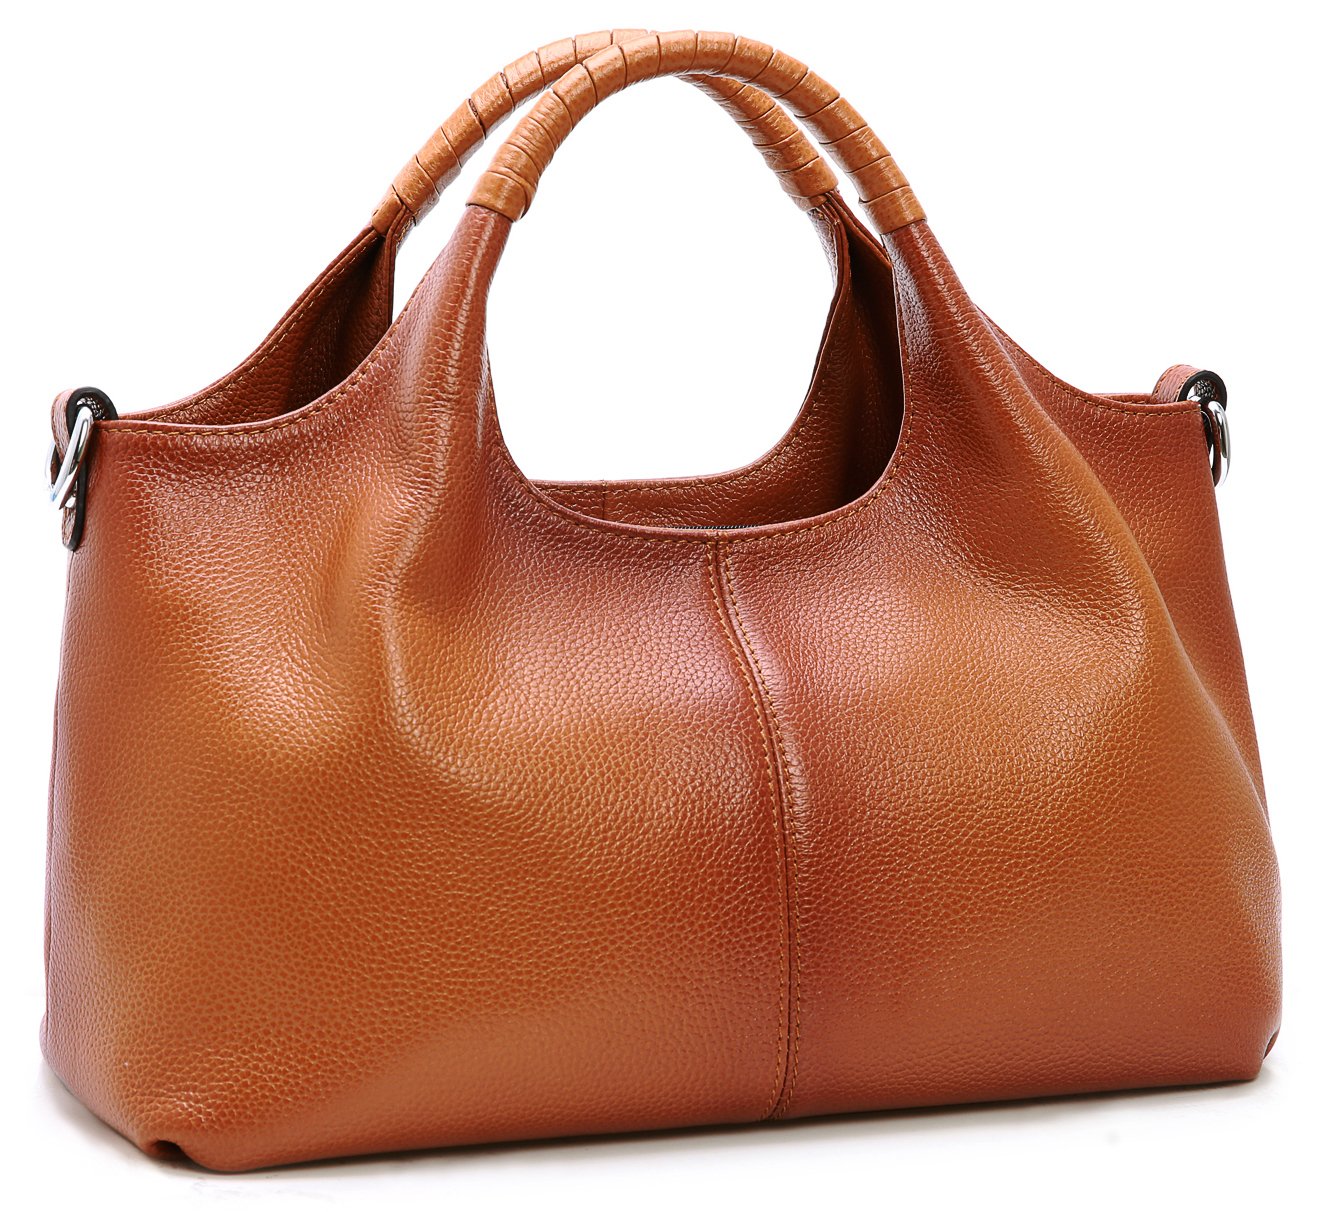 Iswee Genuine Leather Purses and Handbags for Women Shoulder Bag Top Handle Satchel Ladies Hobo Crossbody Bags